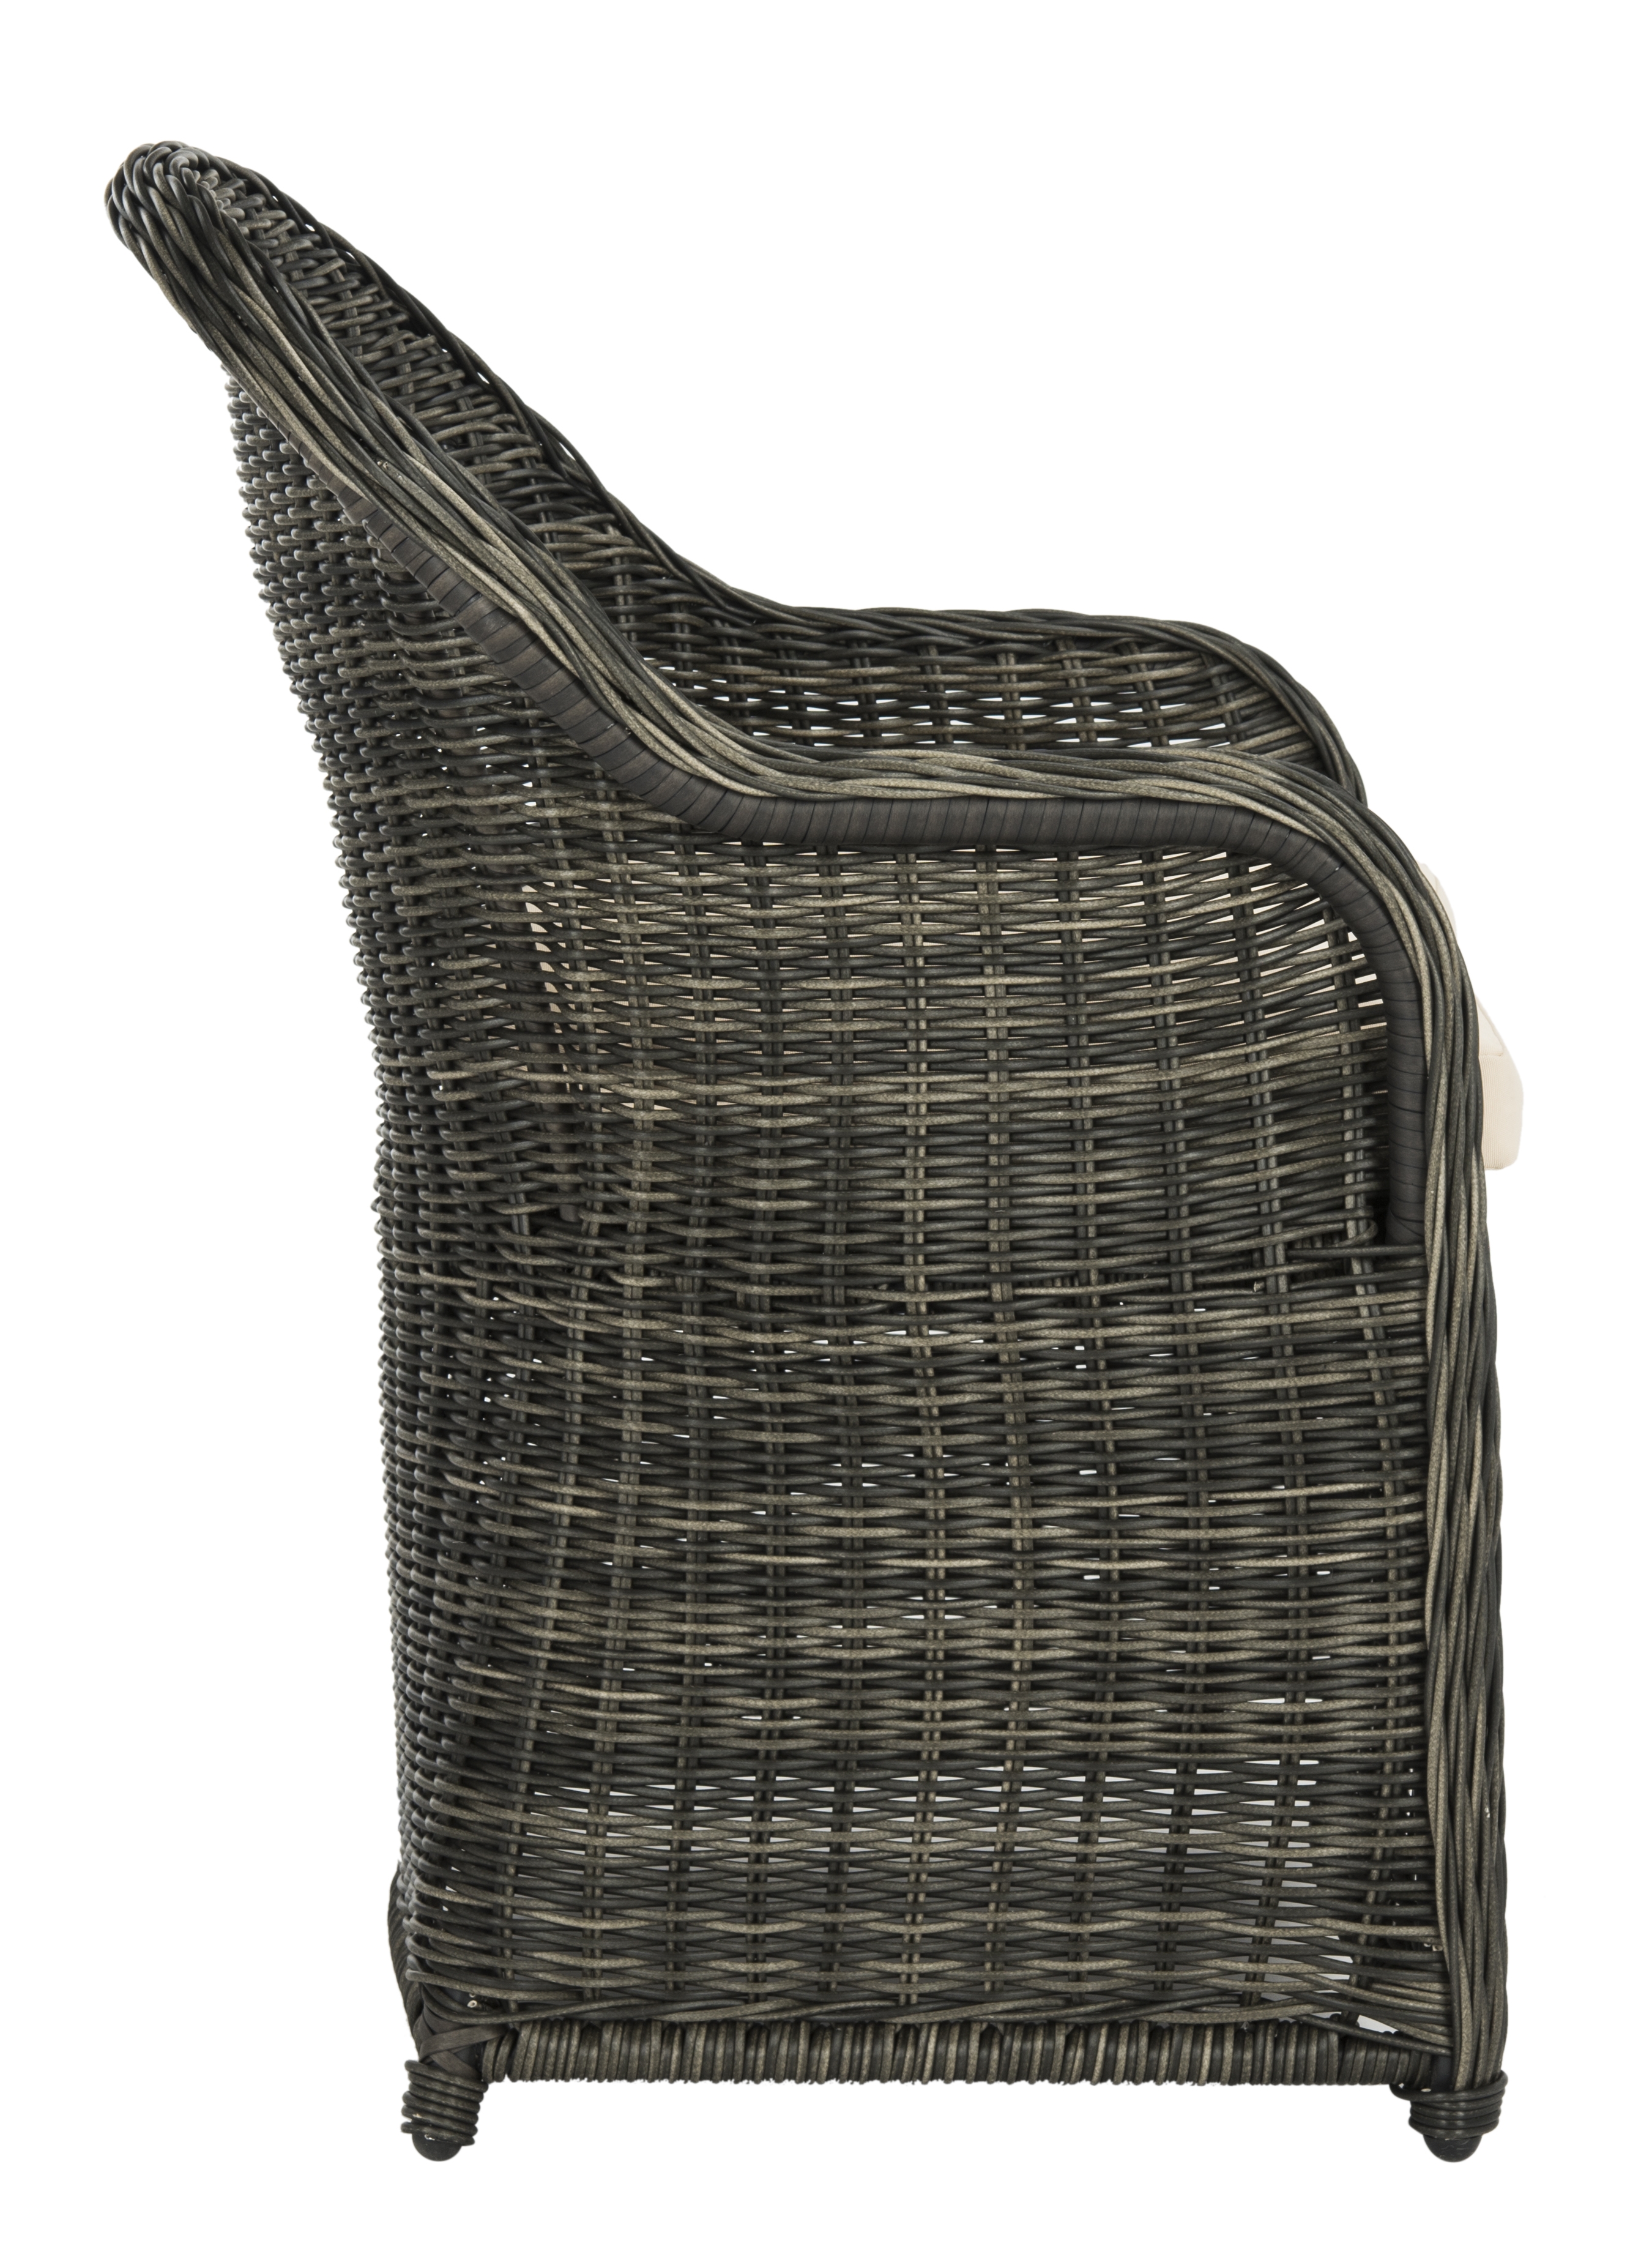 Newton Wicker Arm Chair With Cushion - Grey/Beige - Arlo Home - Image 2